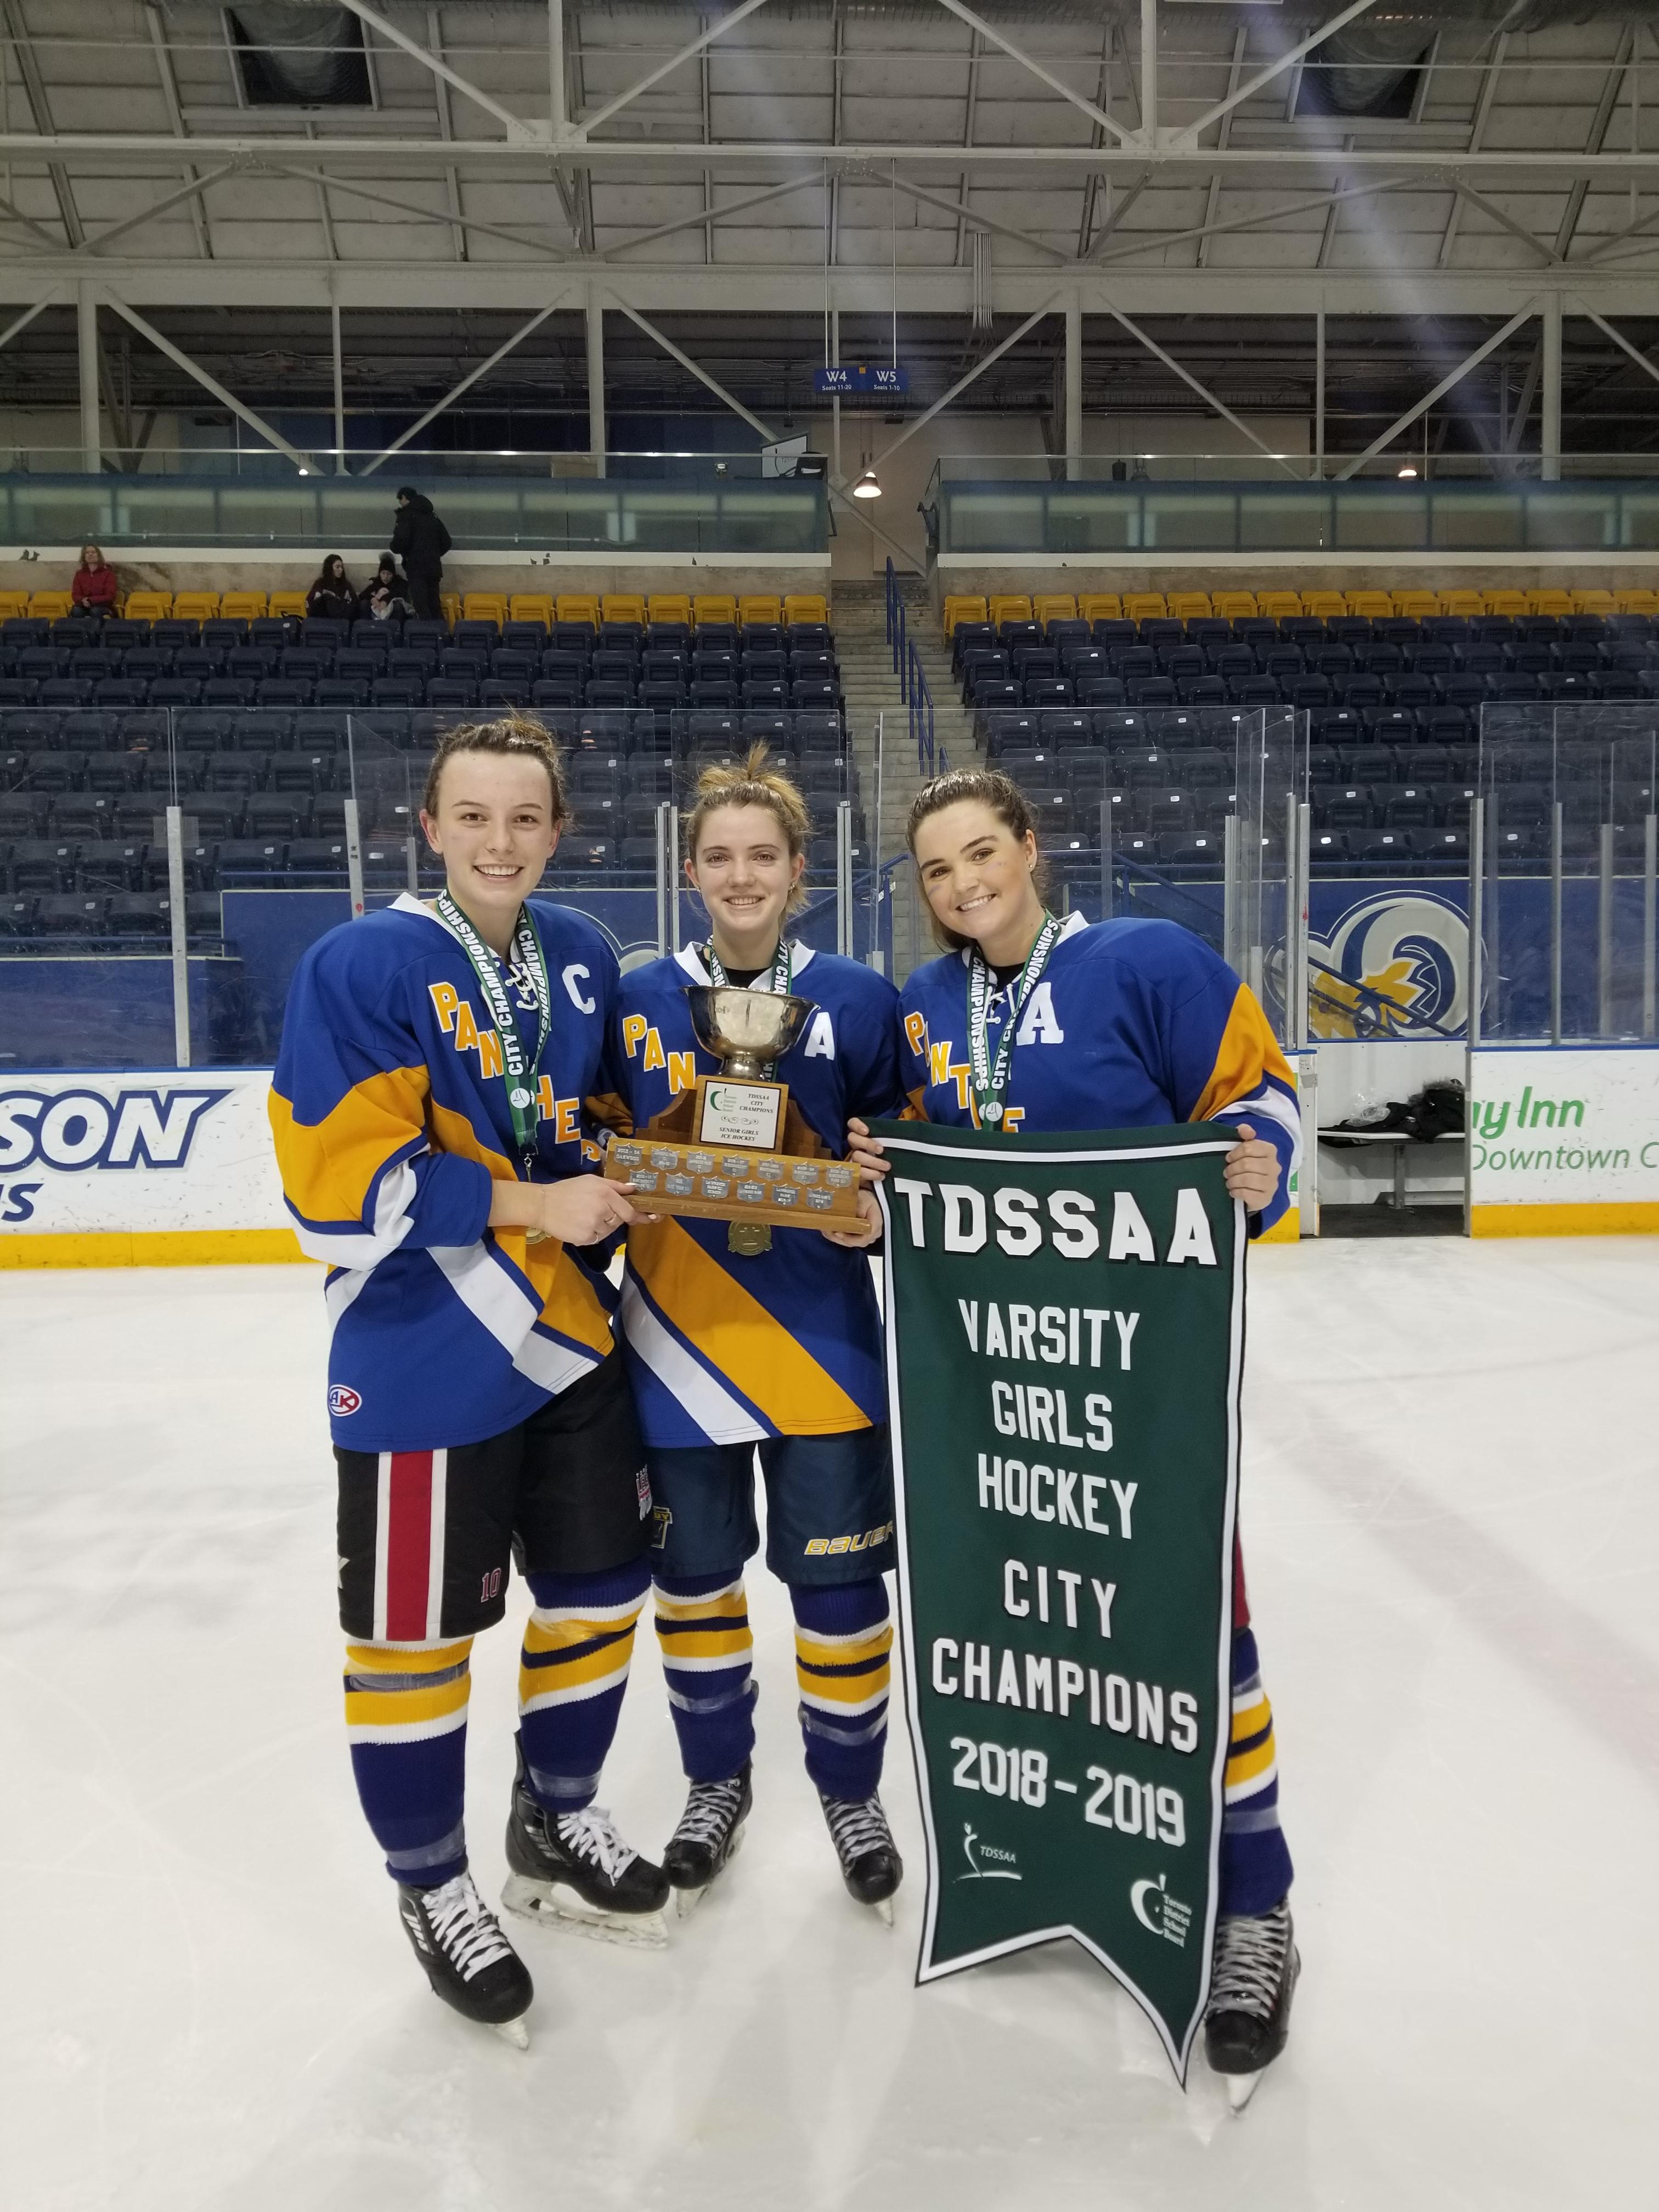 Three girls in hockey uniforms